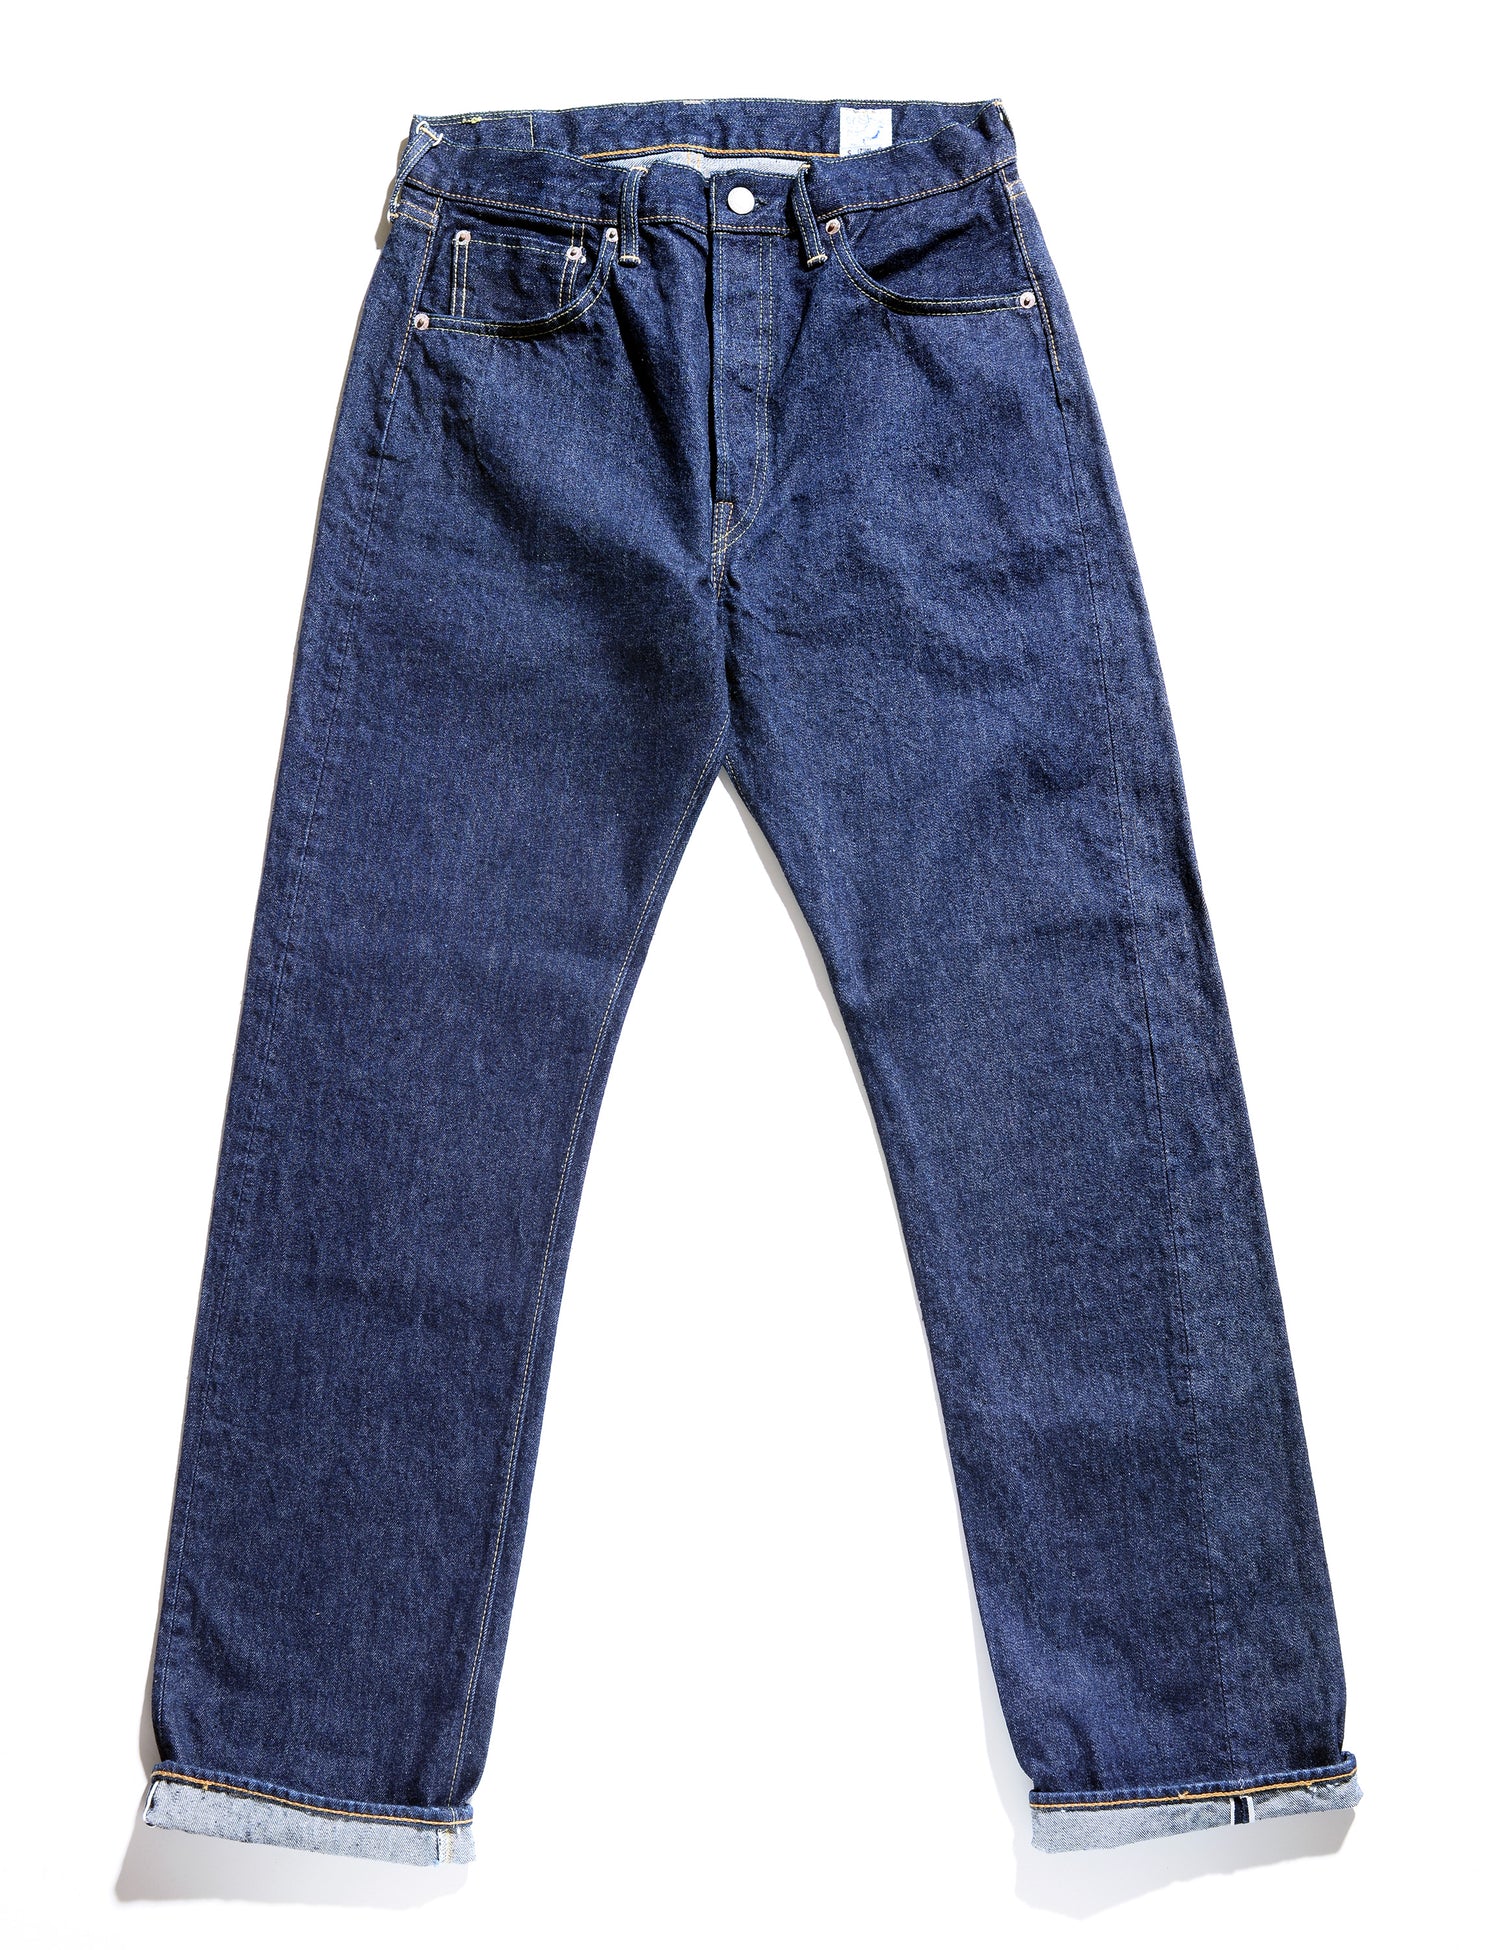 105 Standard Fit Selvedge Denim Jeans - One Wash – Brooklyn